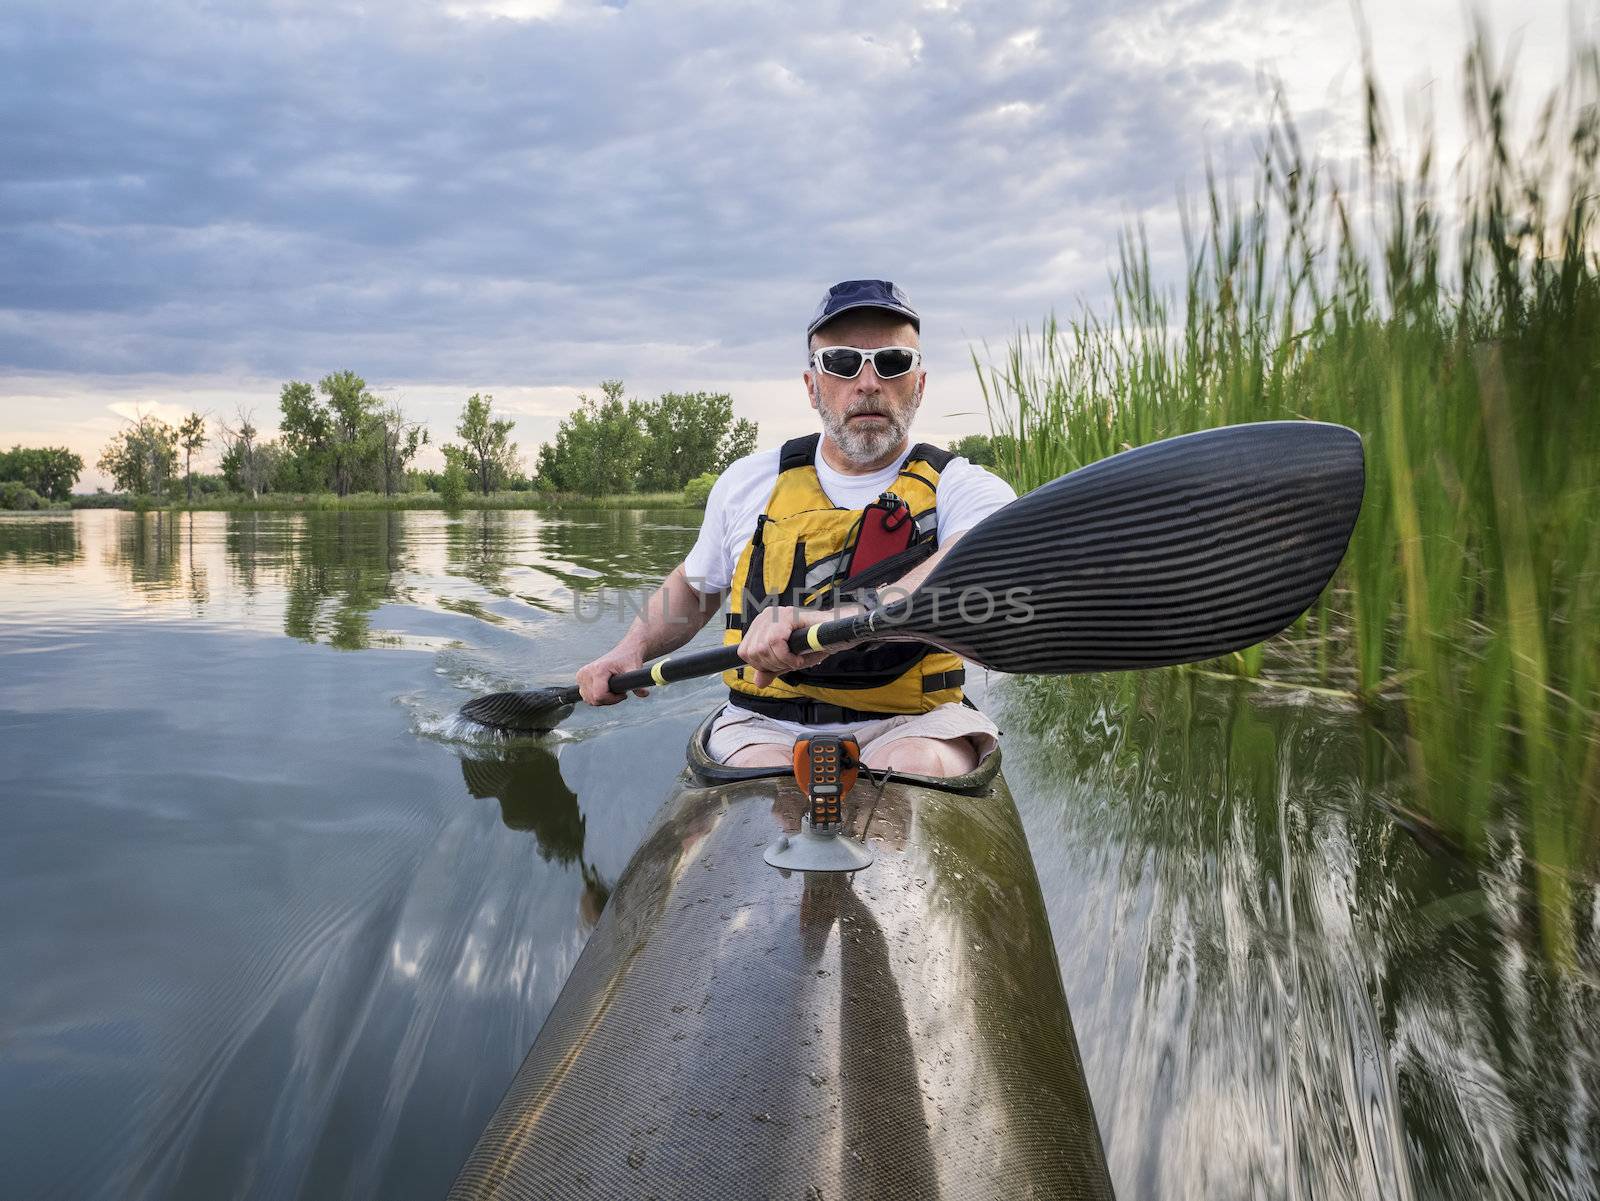 senior paddler in a racing sea kayak  on a calm lake, Fort Collins, Colorado